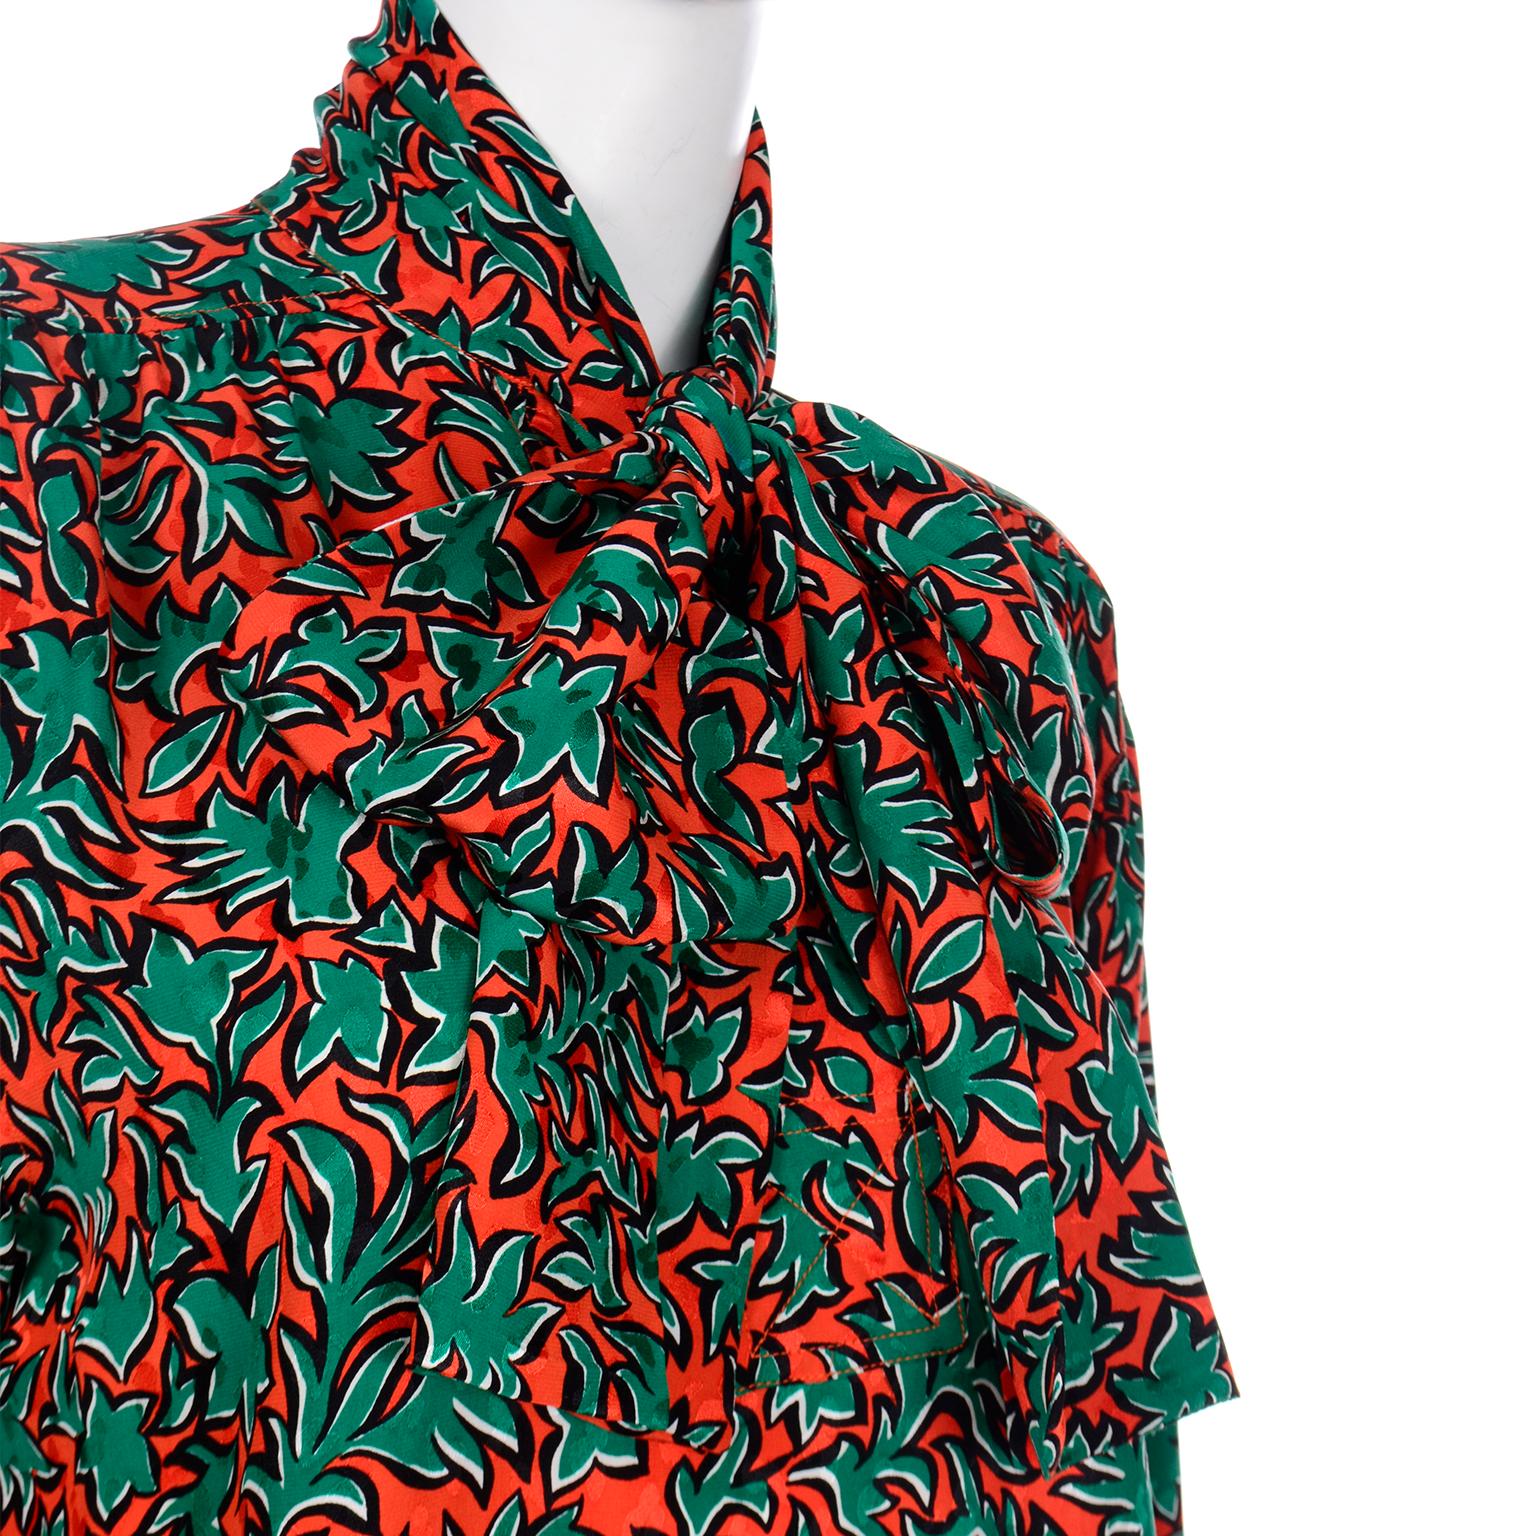 Yves Saint Laurent Orange & Green Leaf Print Blouse With Bow Sash For Sale 3